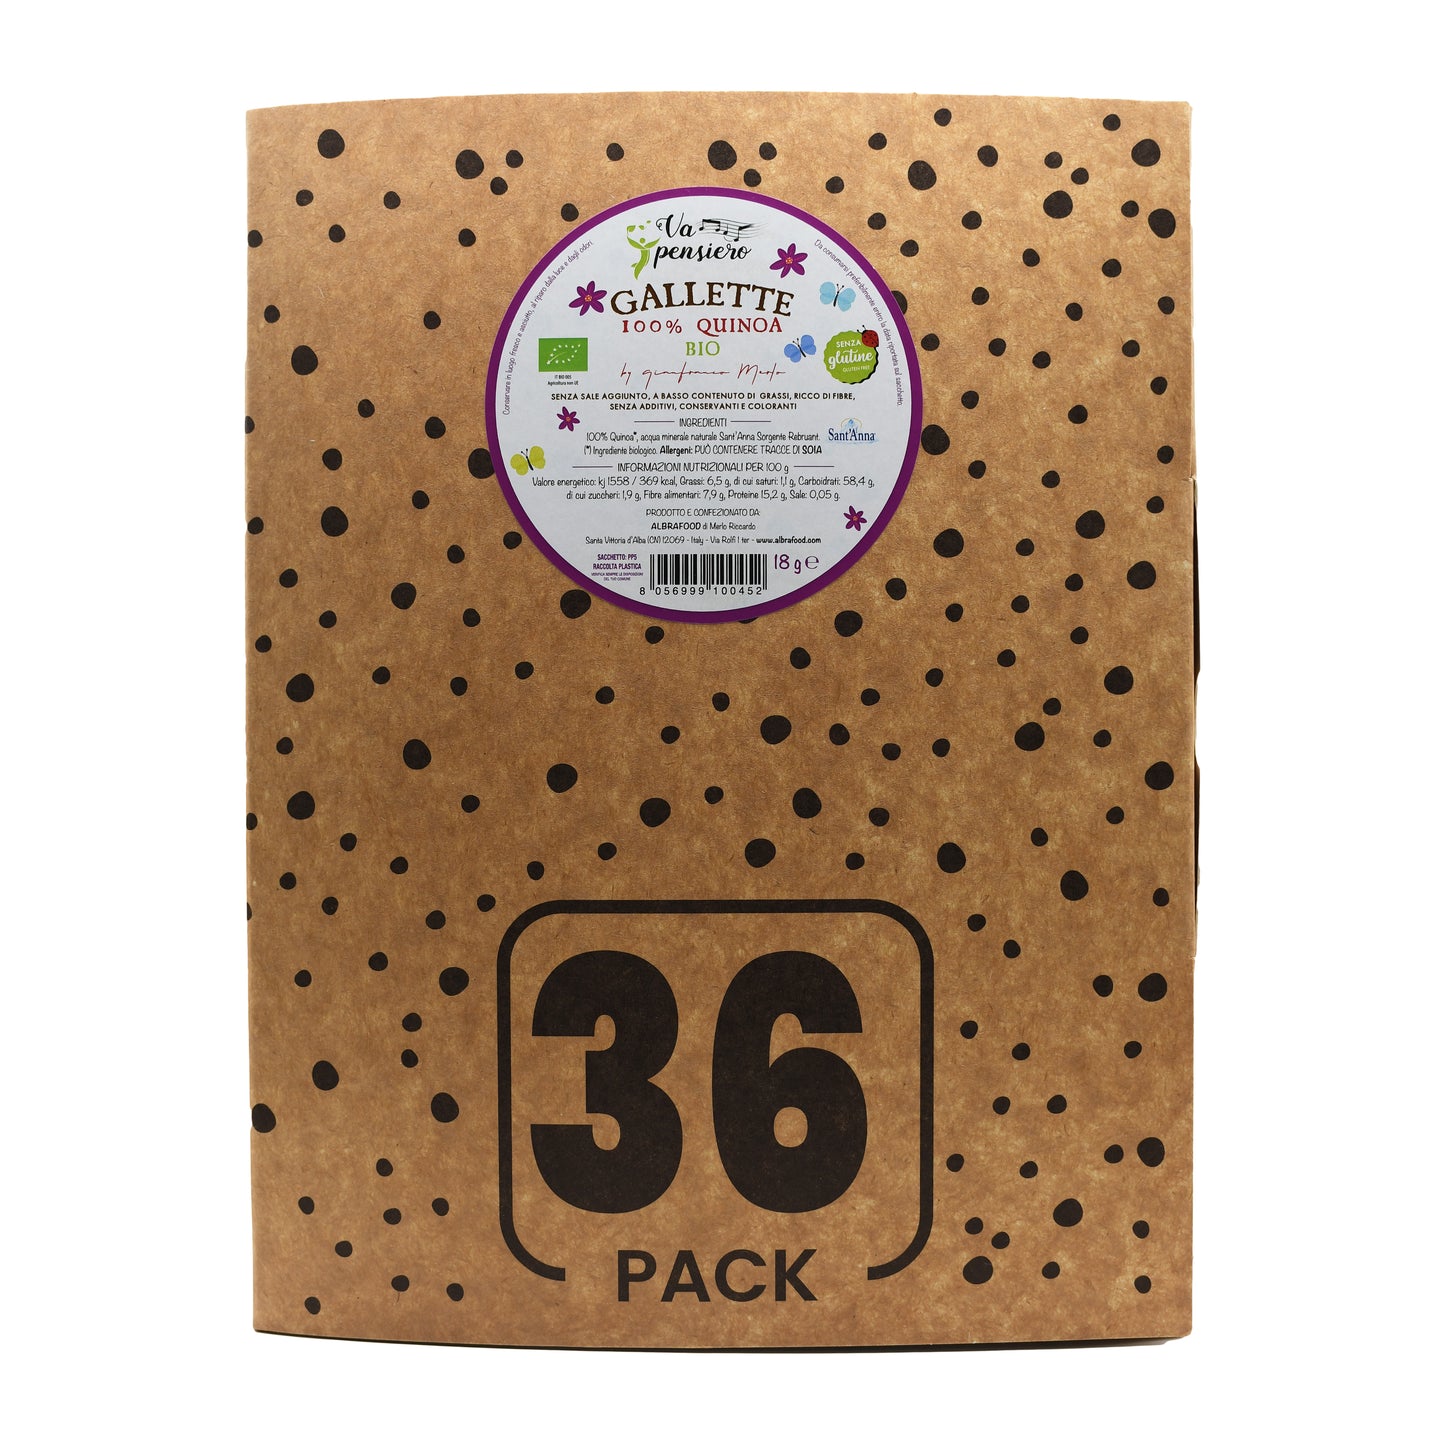 Gallette di 100% Quinoa Bio Va Pensiero - Box 36 pack